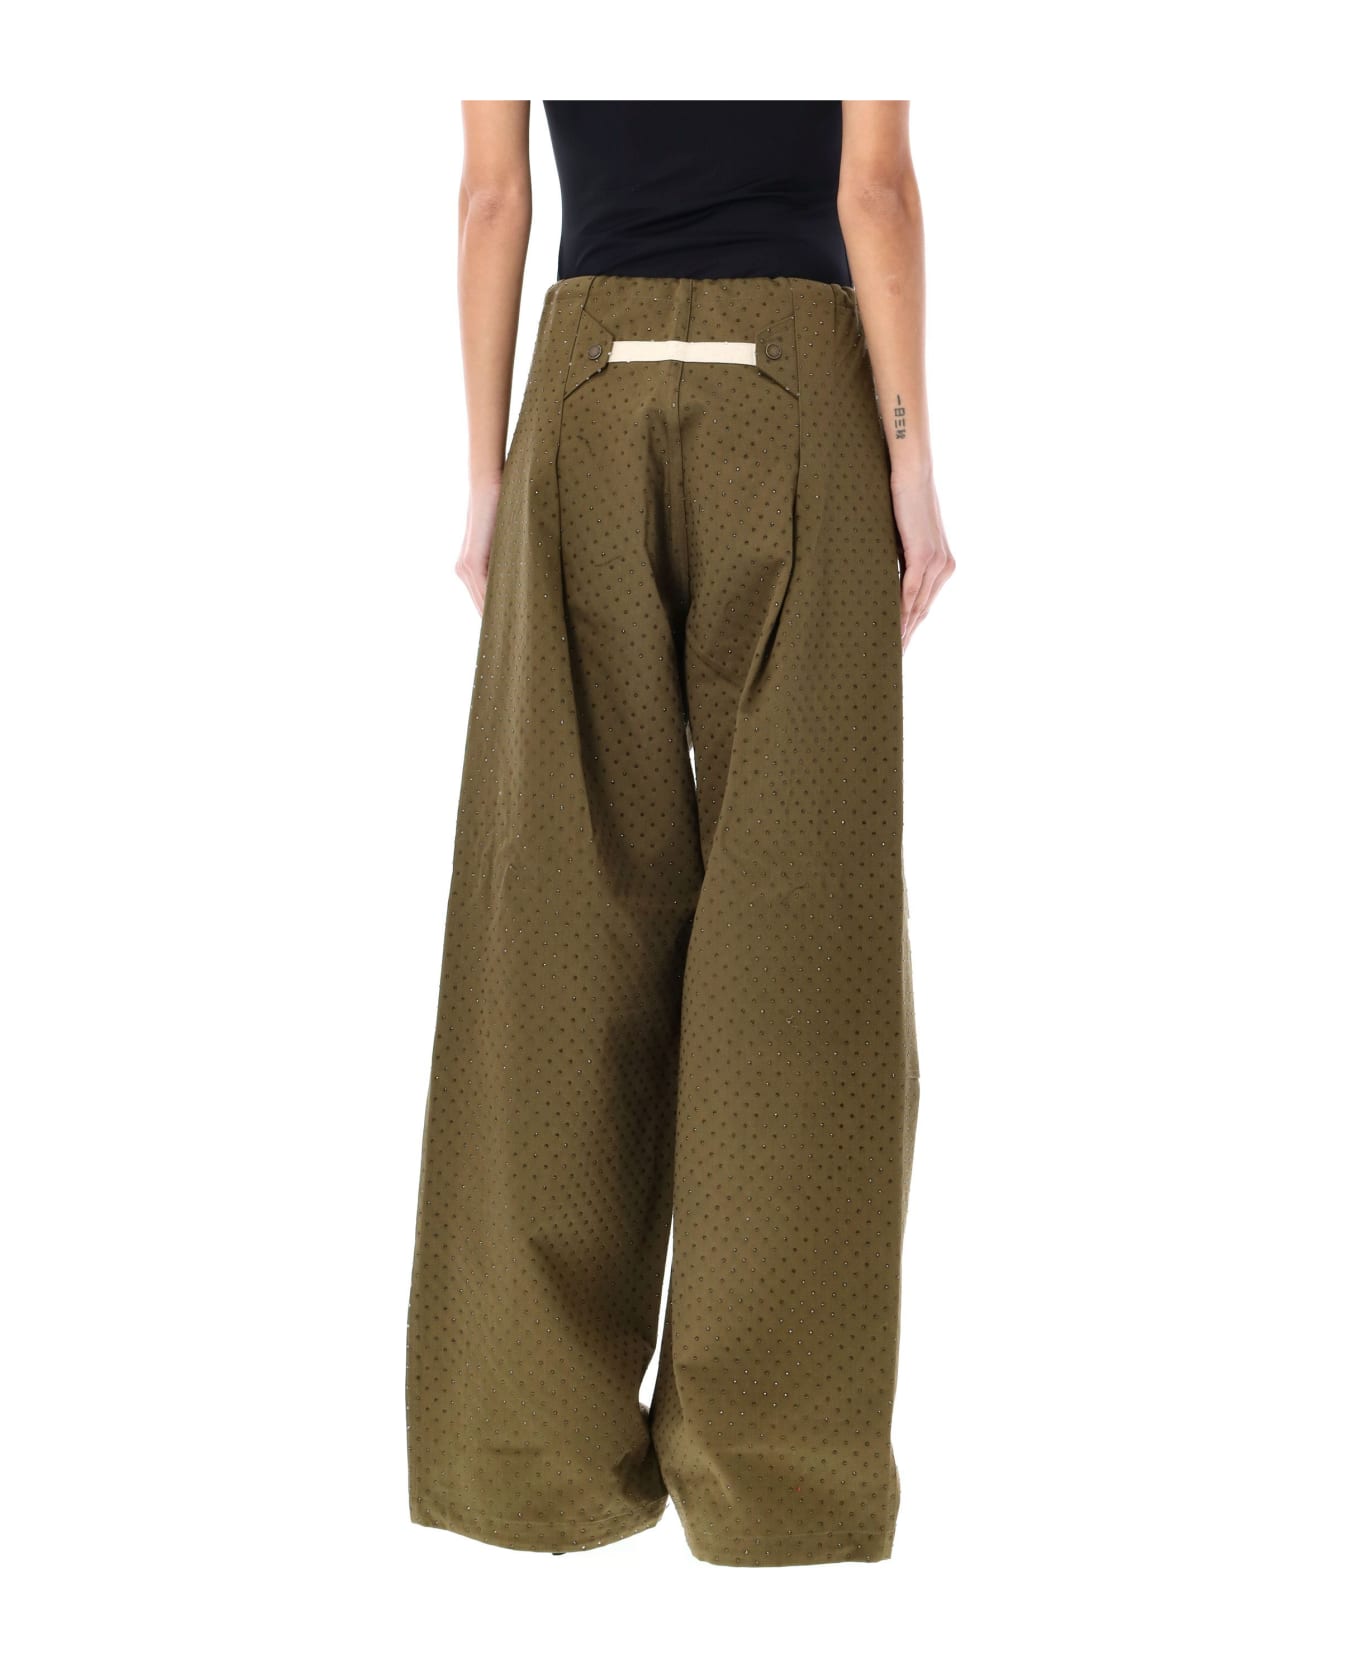 DARKPARK Daisy Crystal Studded Pants - MILITARY GREEN ボトムス